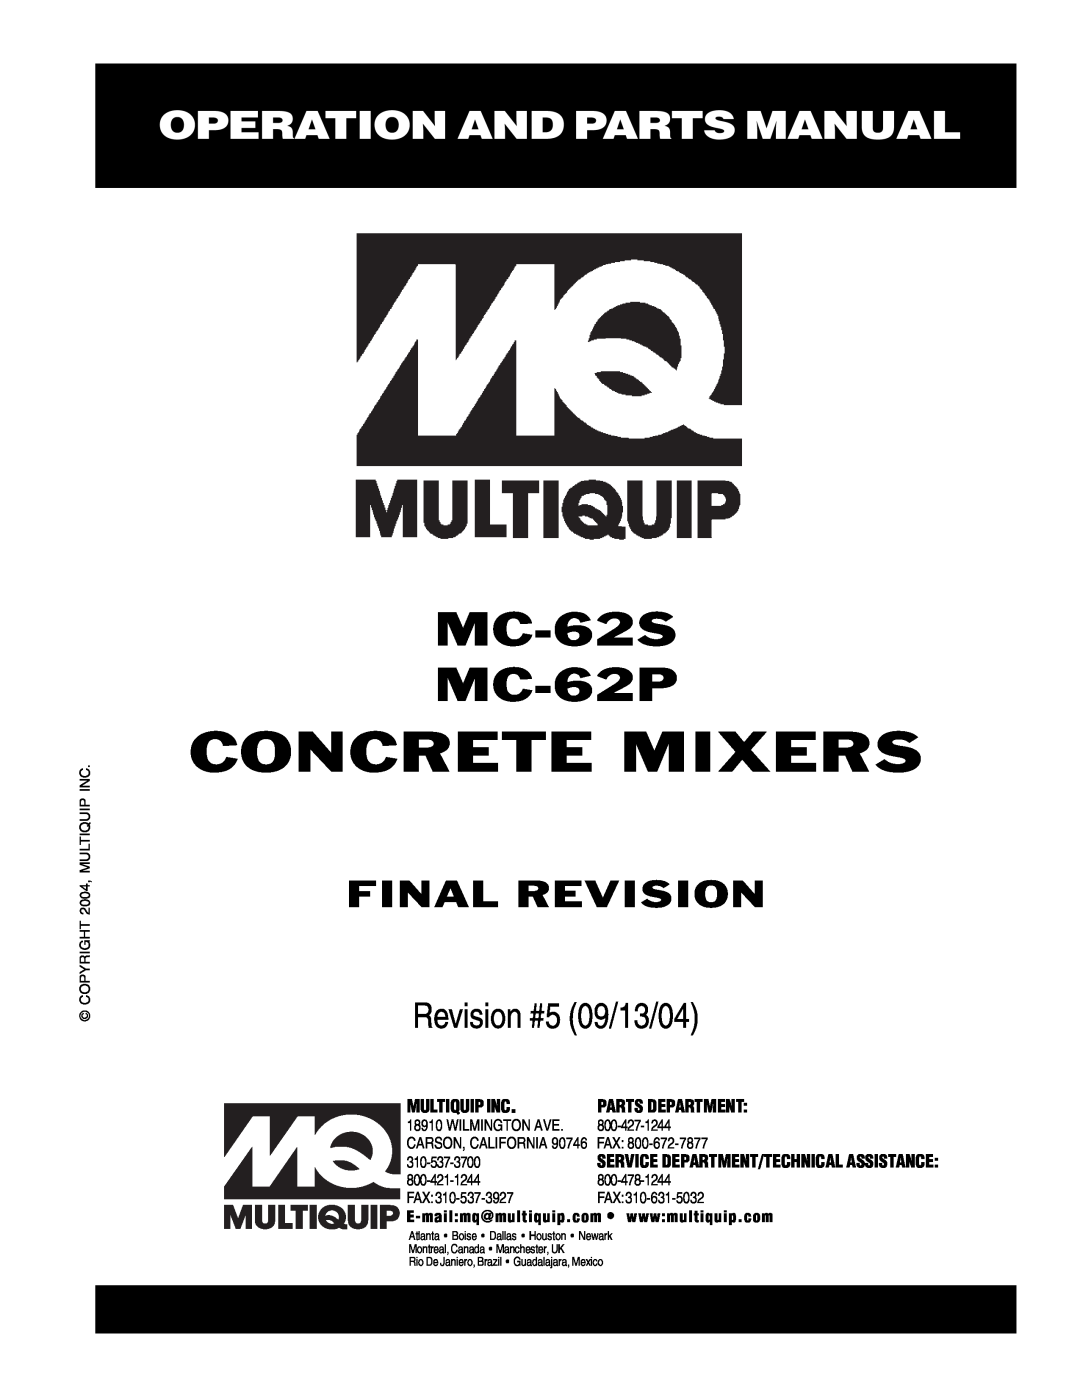 Multiquip manual Operation And Parts Manual, Concrete Mixers, MC-62S MC-62P, Final Revision, Revision #5 09/13/04 